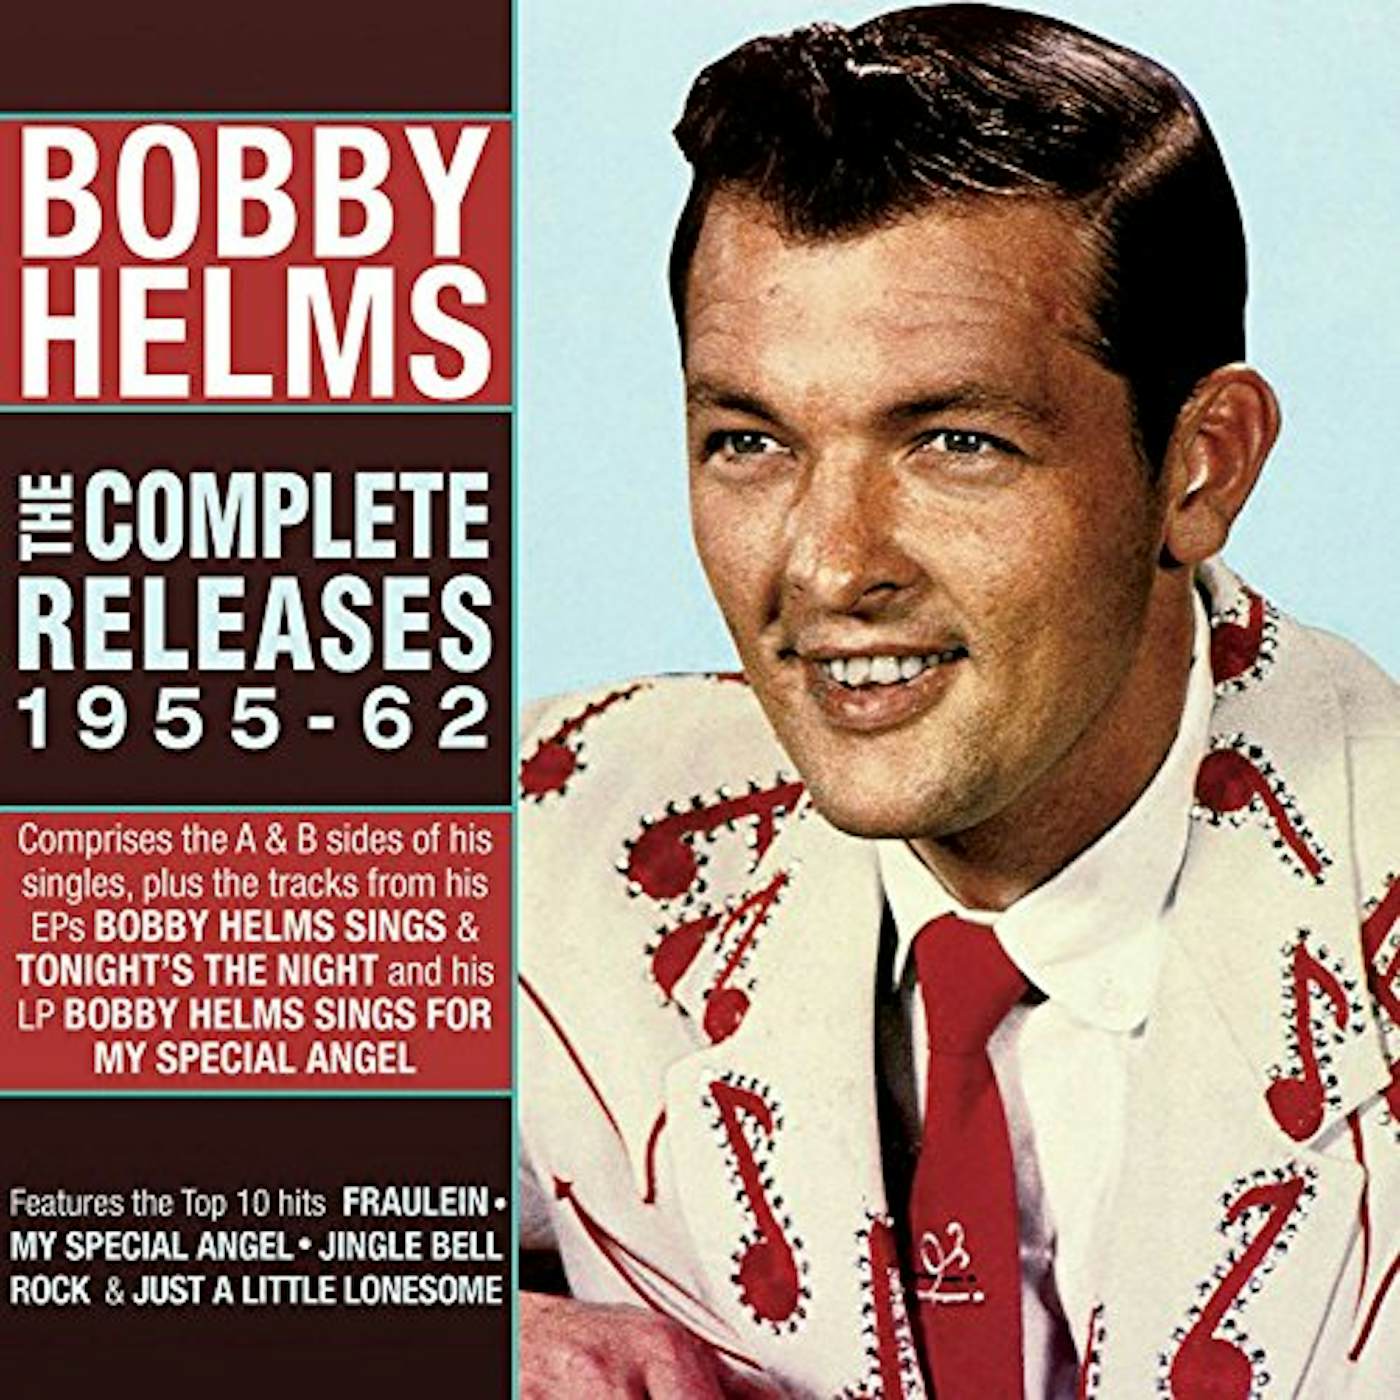 Jingle Bell Rock  Álbum de Bobby Helms 